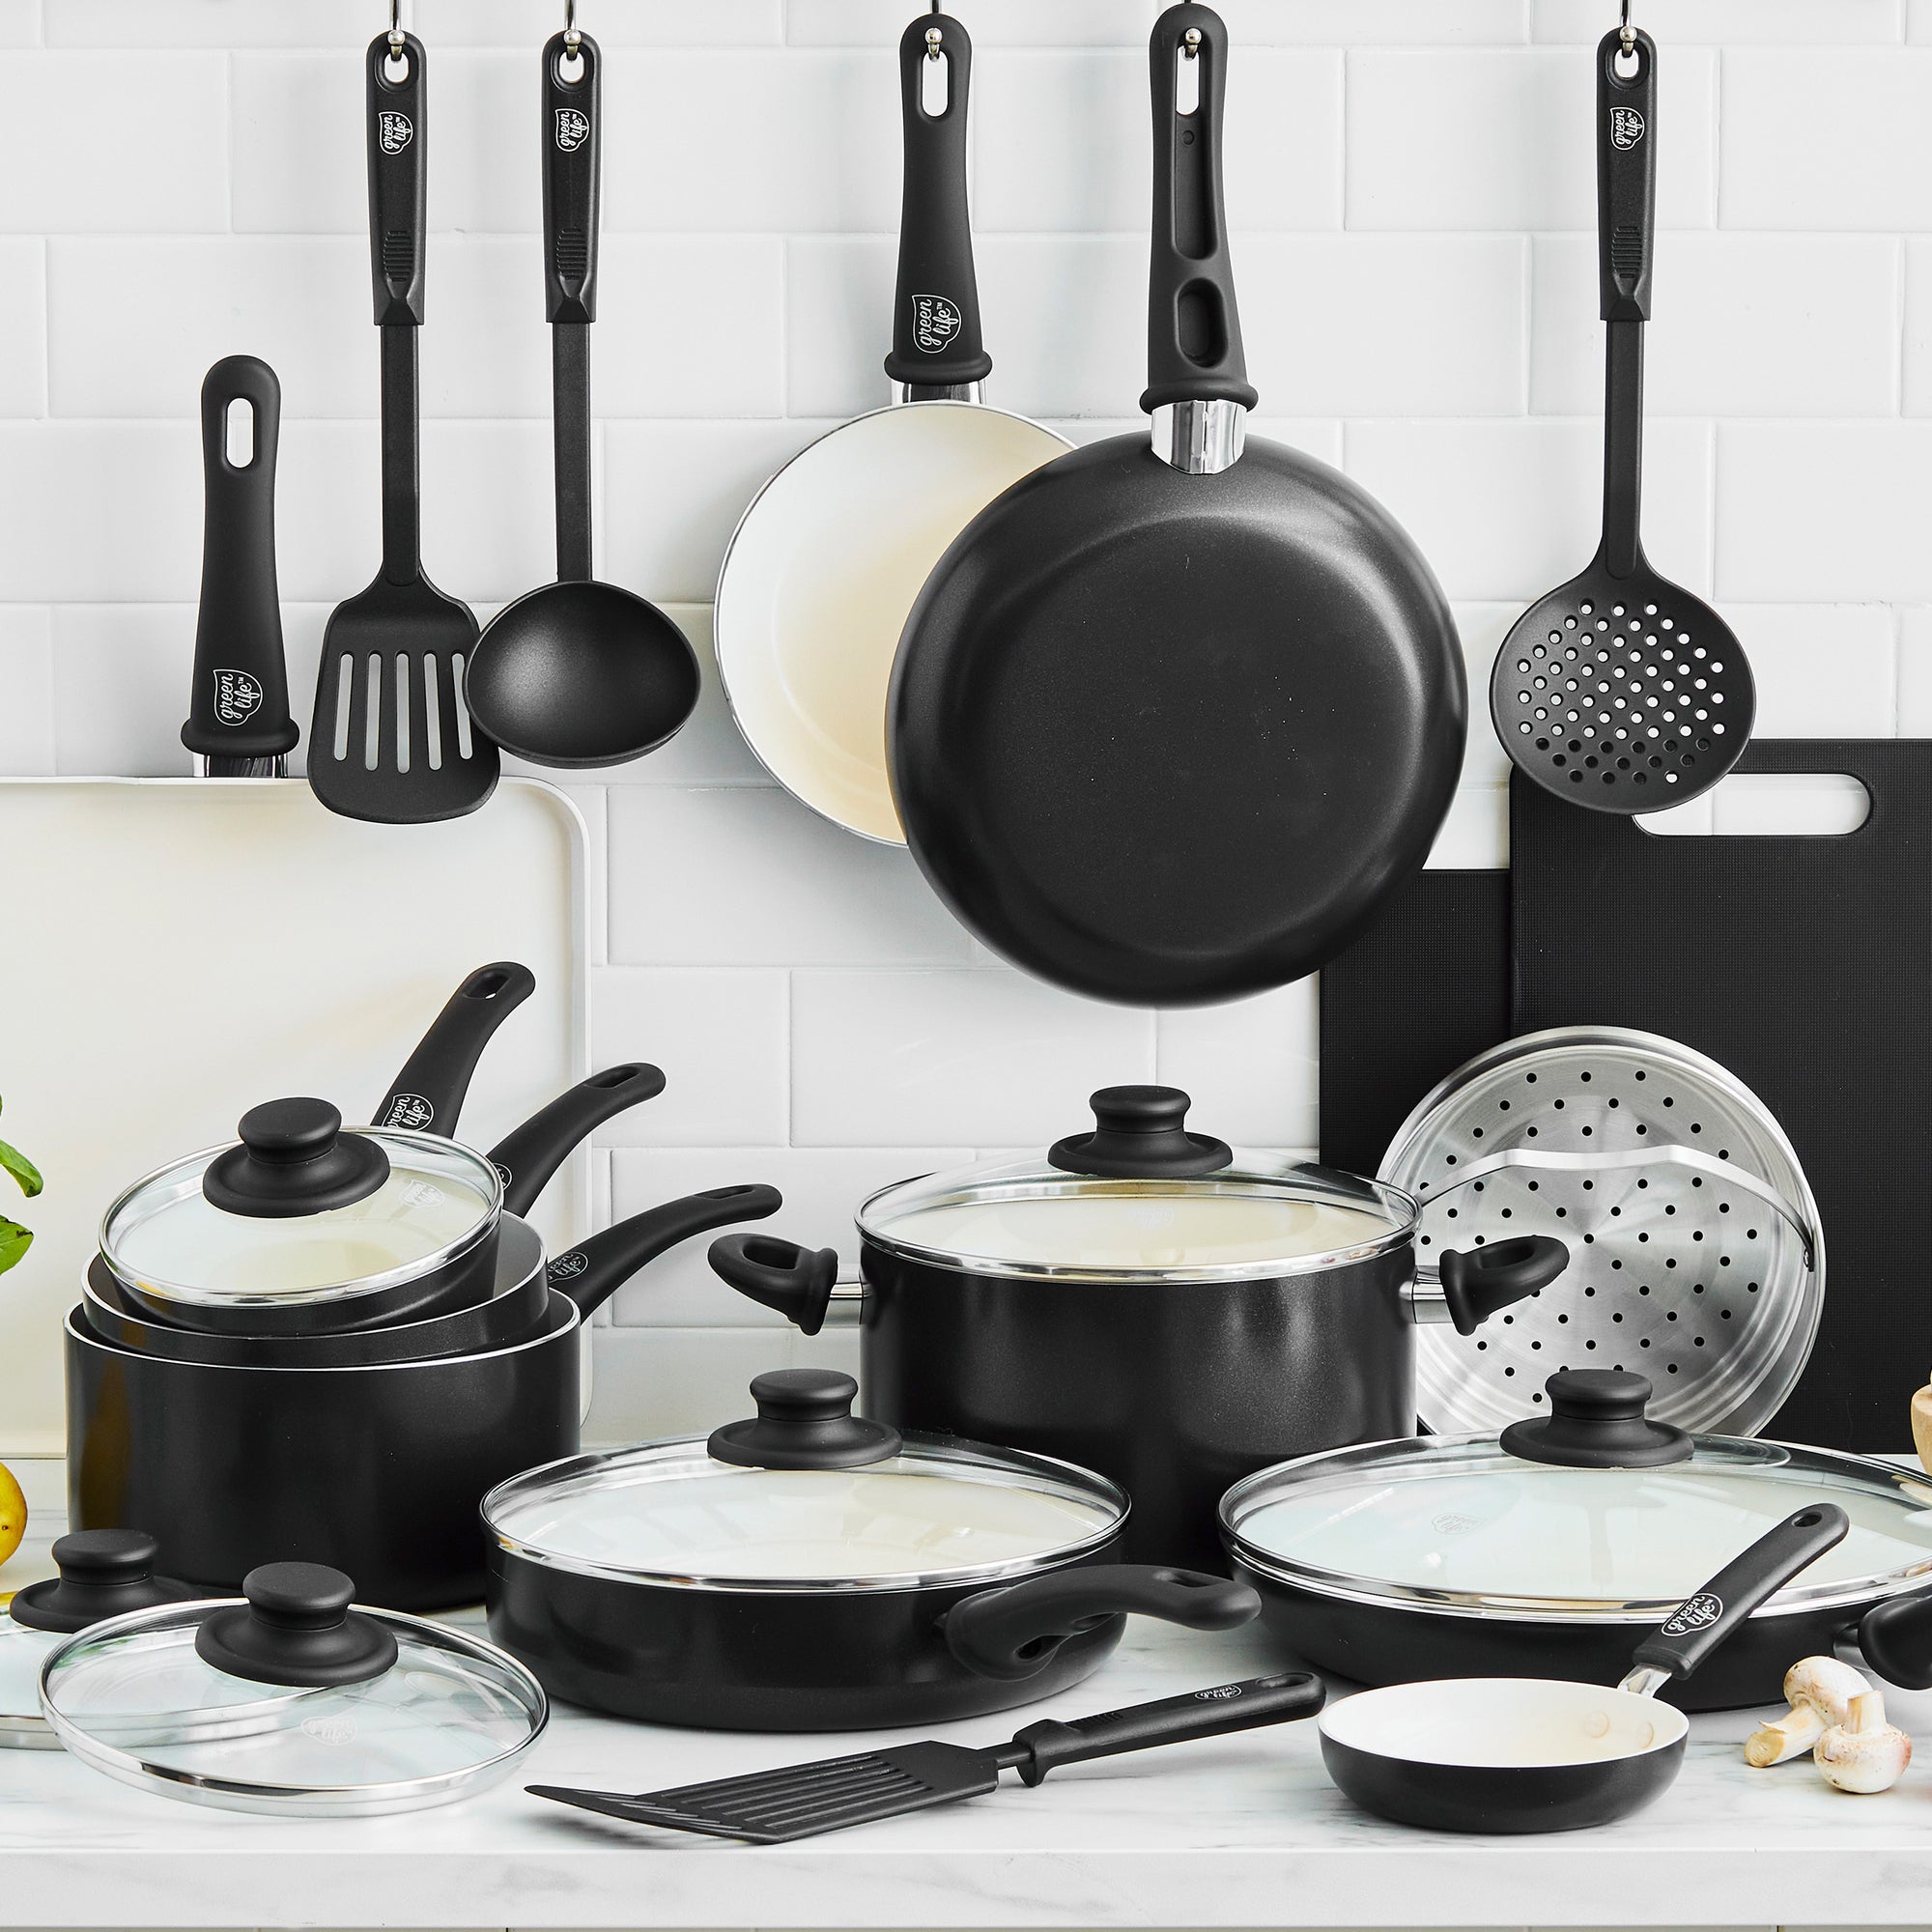 Greenlife Soft Grip Diamond Healthy Ceramic Nonstick, Cookware Pots and  Pans Set, 16 Piece, Black - Cookware Sets, Facebook Marketplace